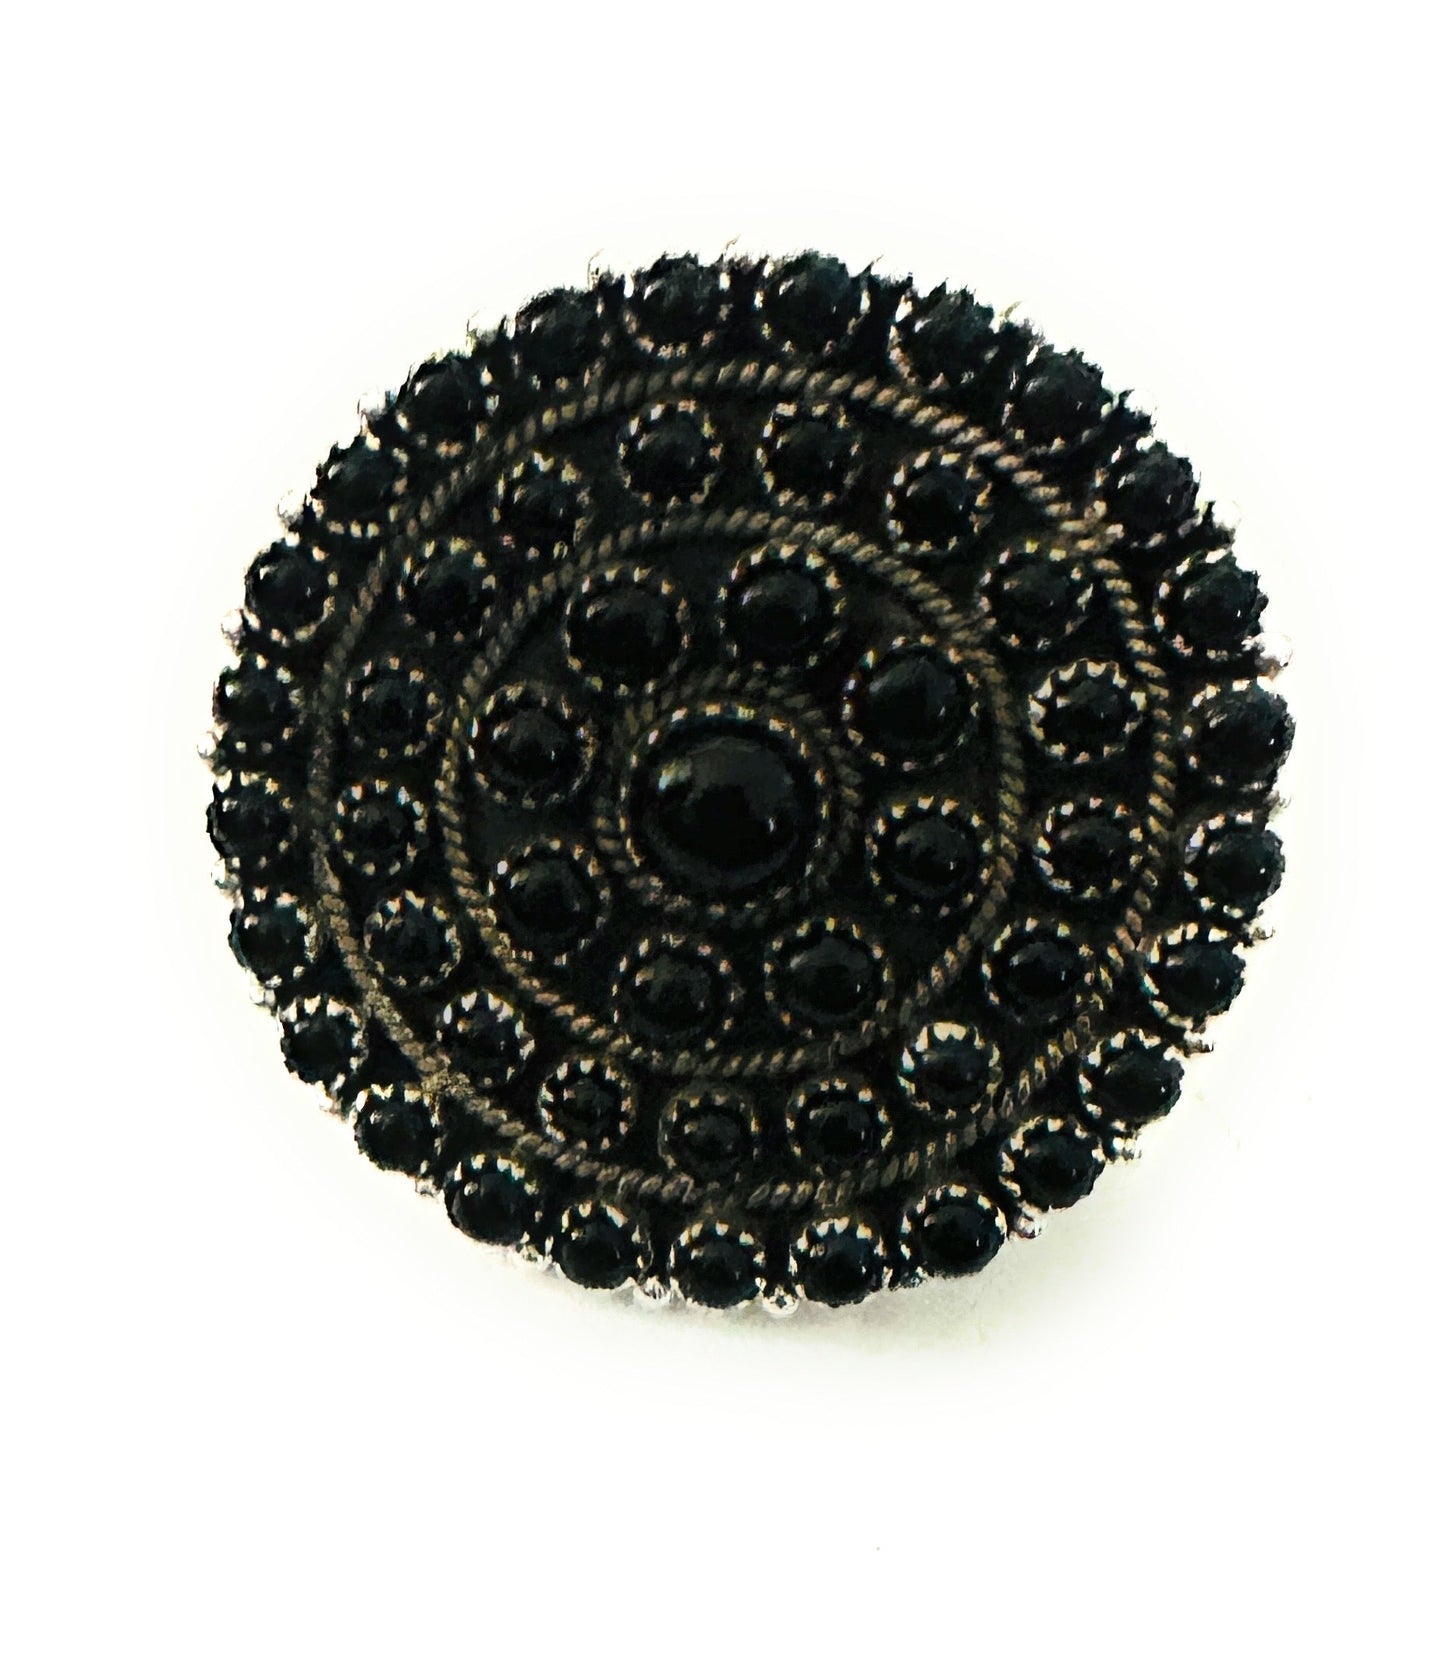 Handmade Sterling Silver & Black Onyx Cluster Adjustable Ring by Nizhoni